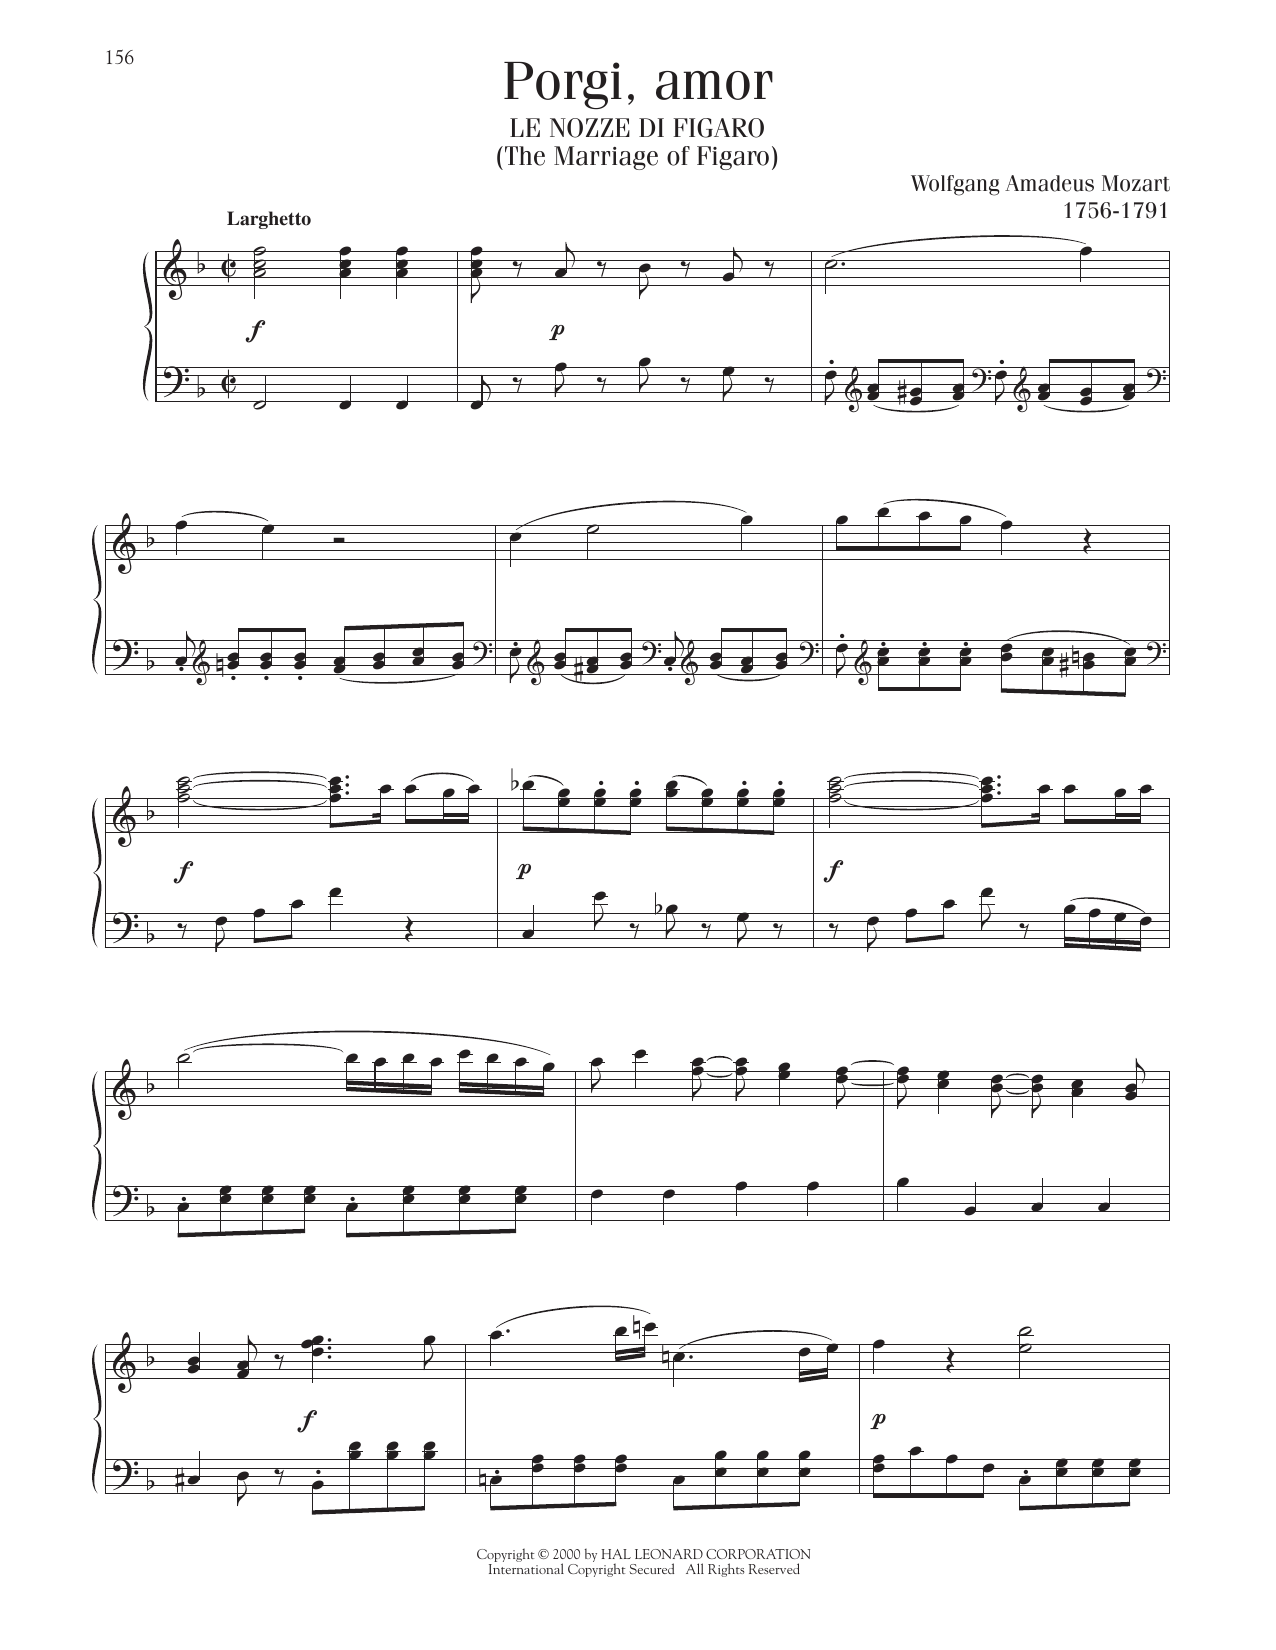 Wolfgang Amadeus Mozart Porgi, Amor Sheet Music Notes & Chords for Piano Solo - Download or Print PDF